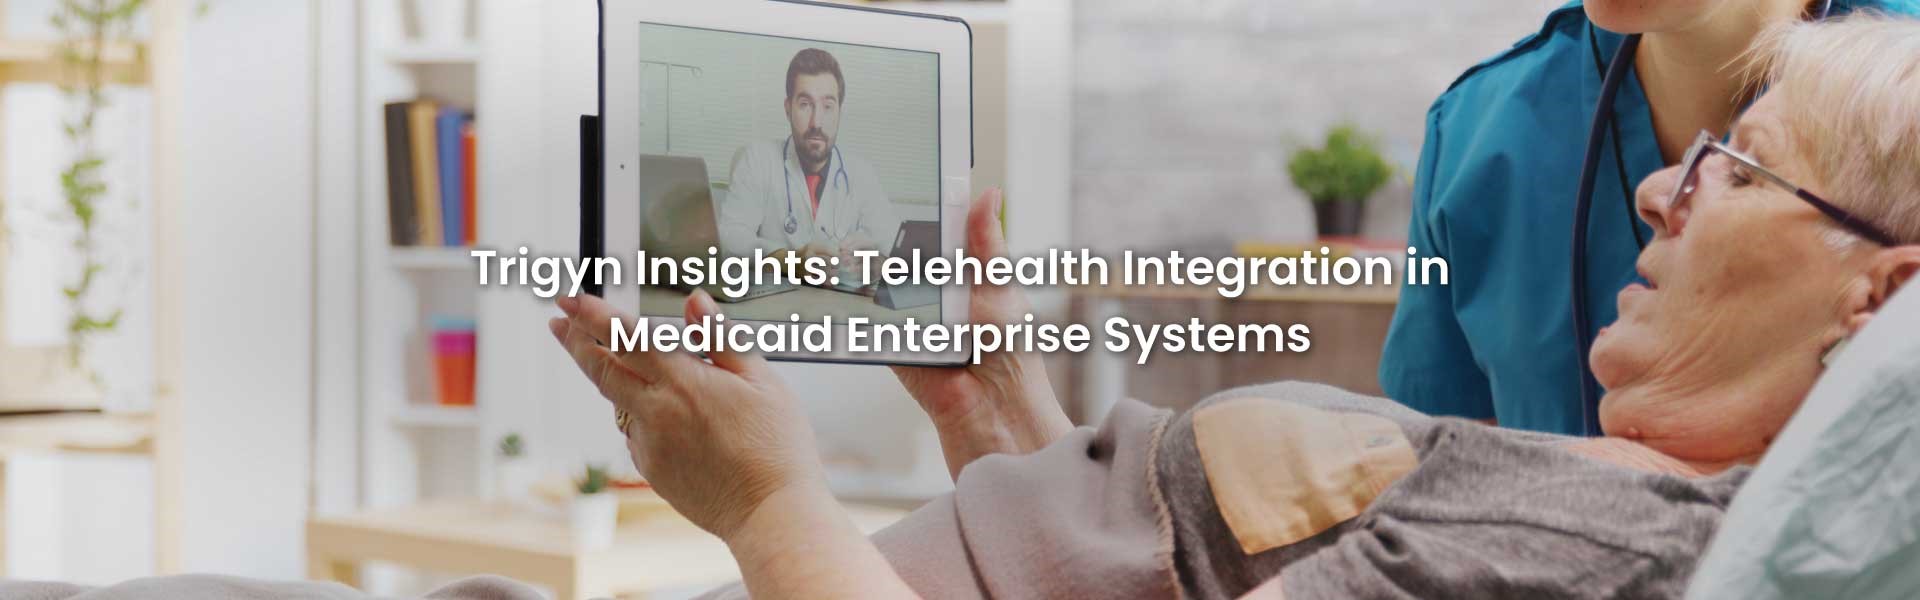 Telehealth in Medicaid Enterprise Systems